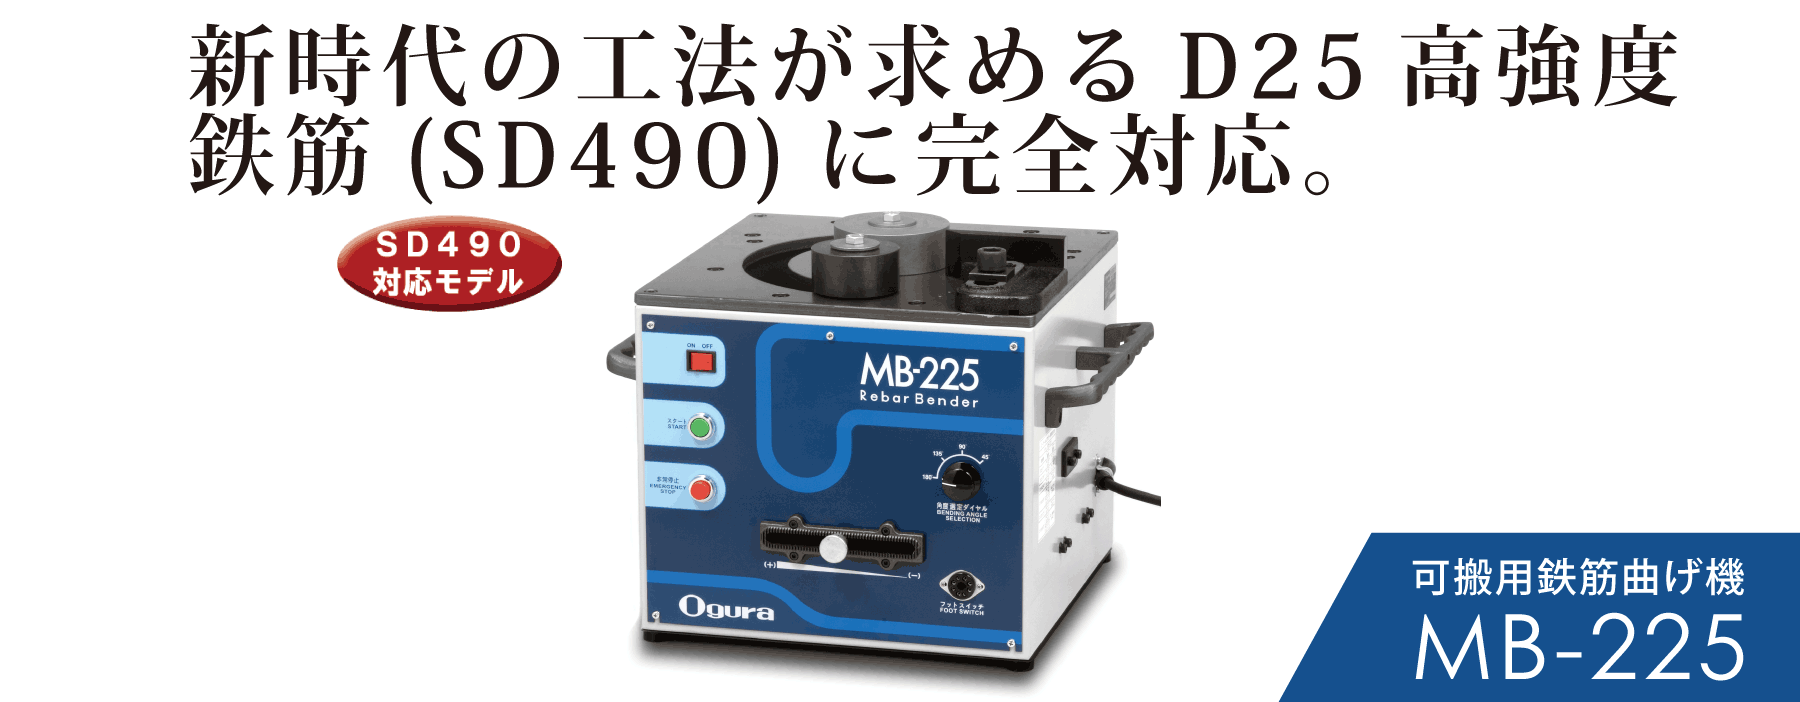 MB-225製品紹介 PC